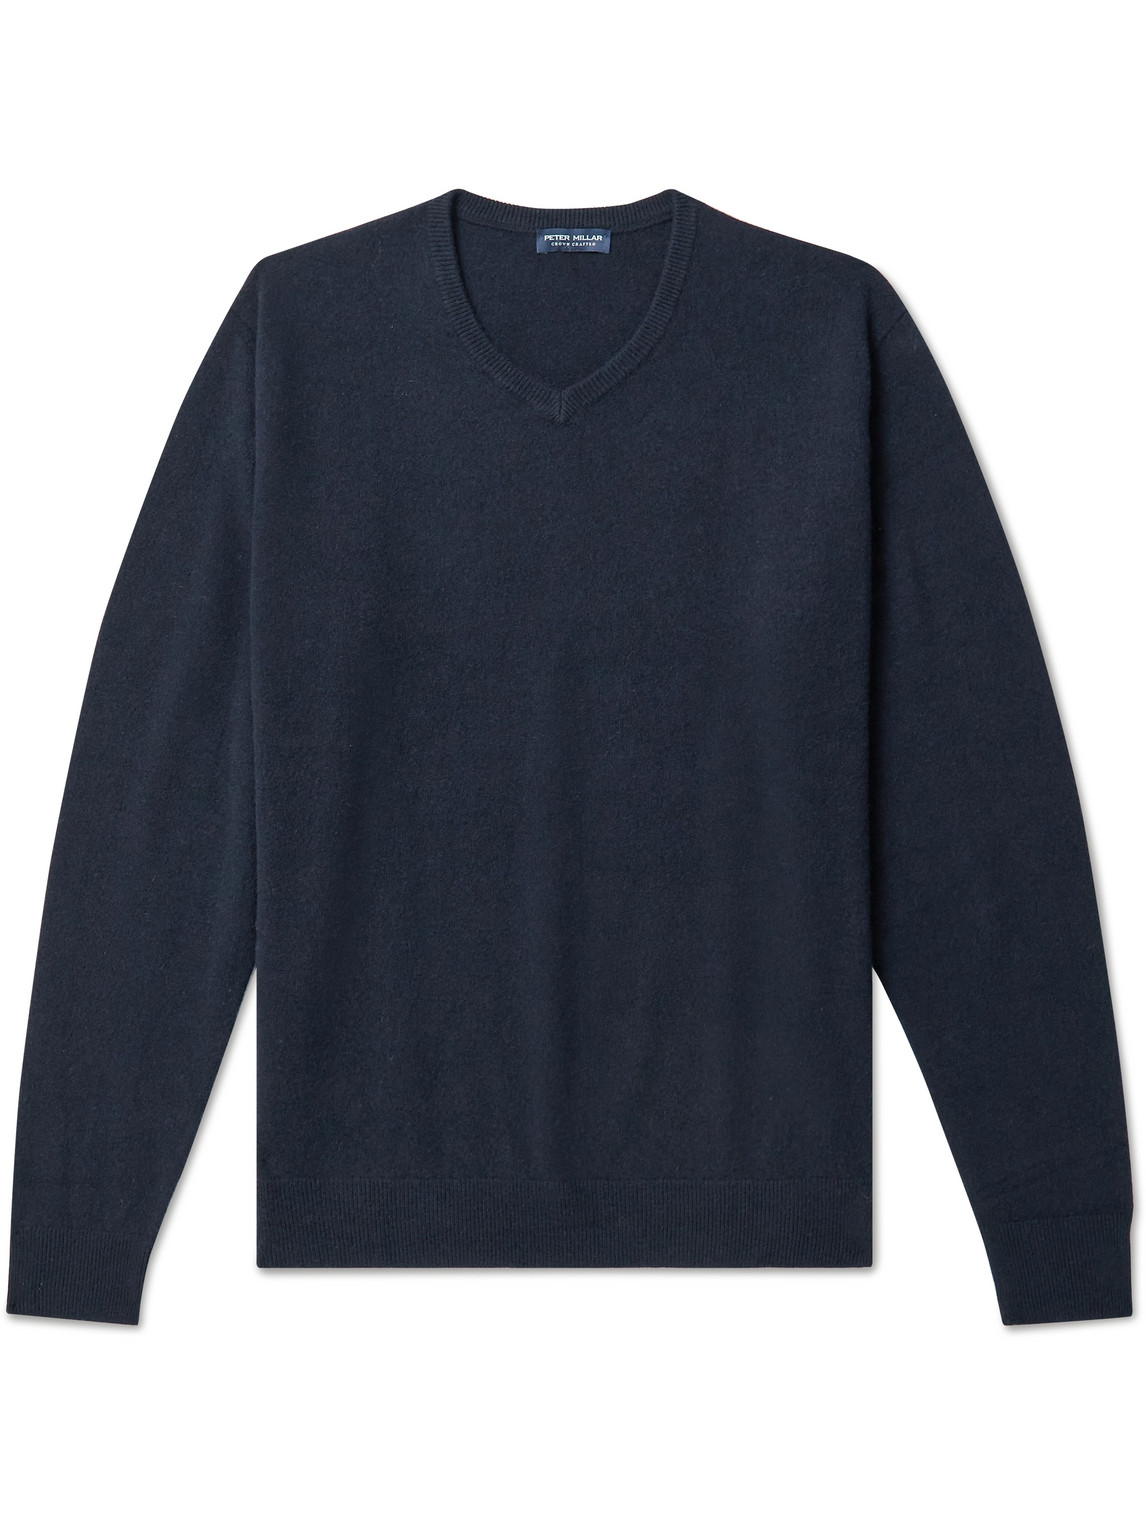 Peter Millar Journeyman Merino Wool and Cashmere-Blend Sweater